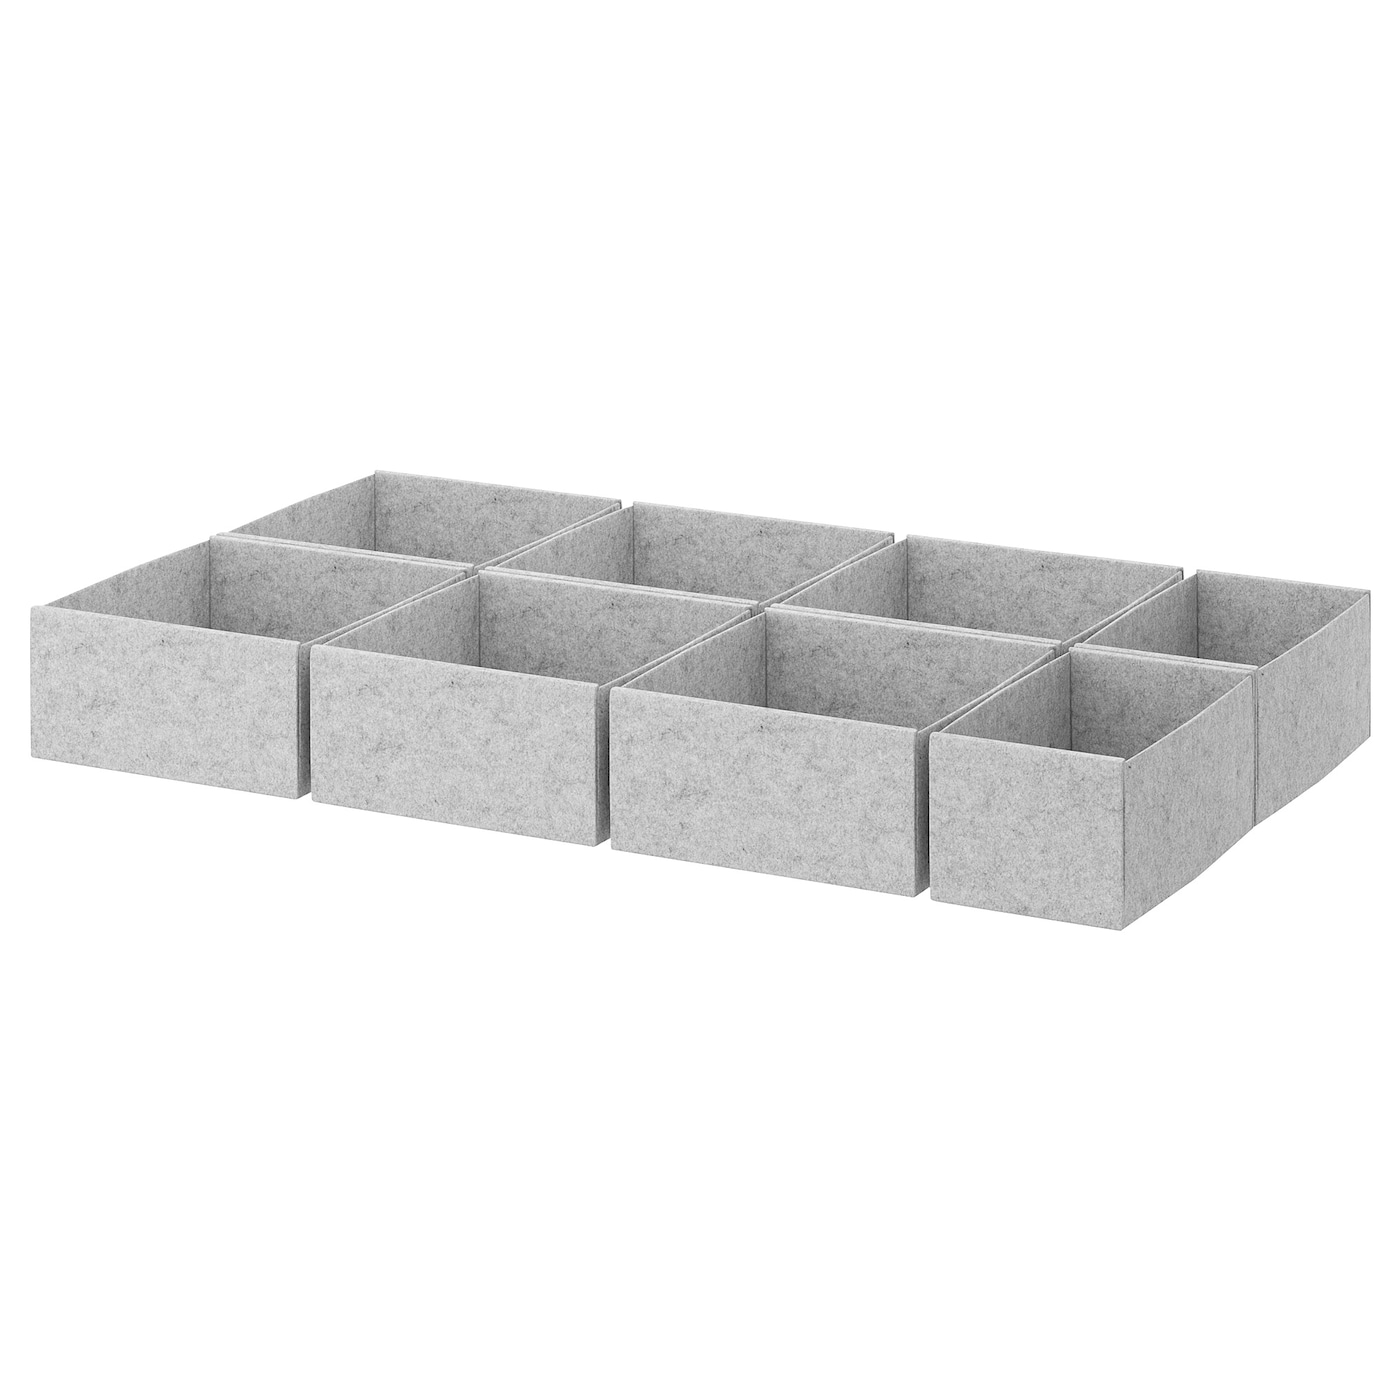 Коробка - IKEA KOMPLEMENТ /КОМПЛИМЕНТ ИКЕА, 100x58 см, серый